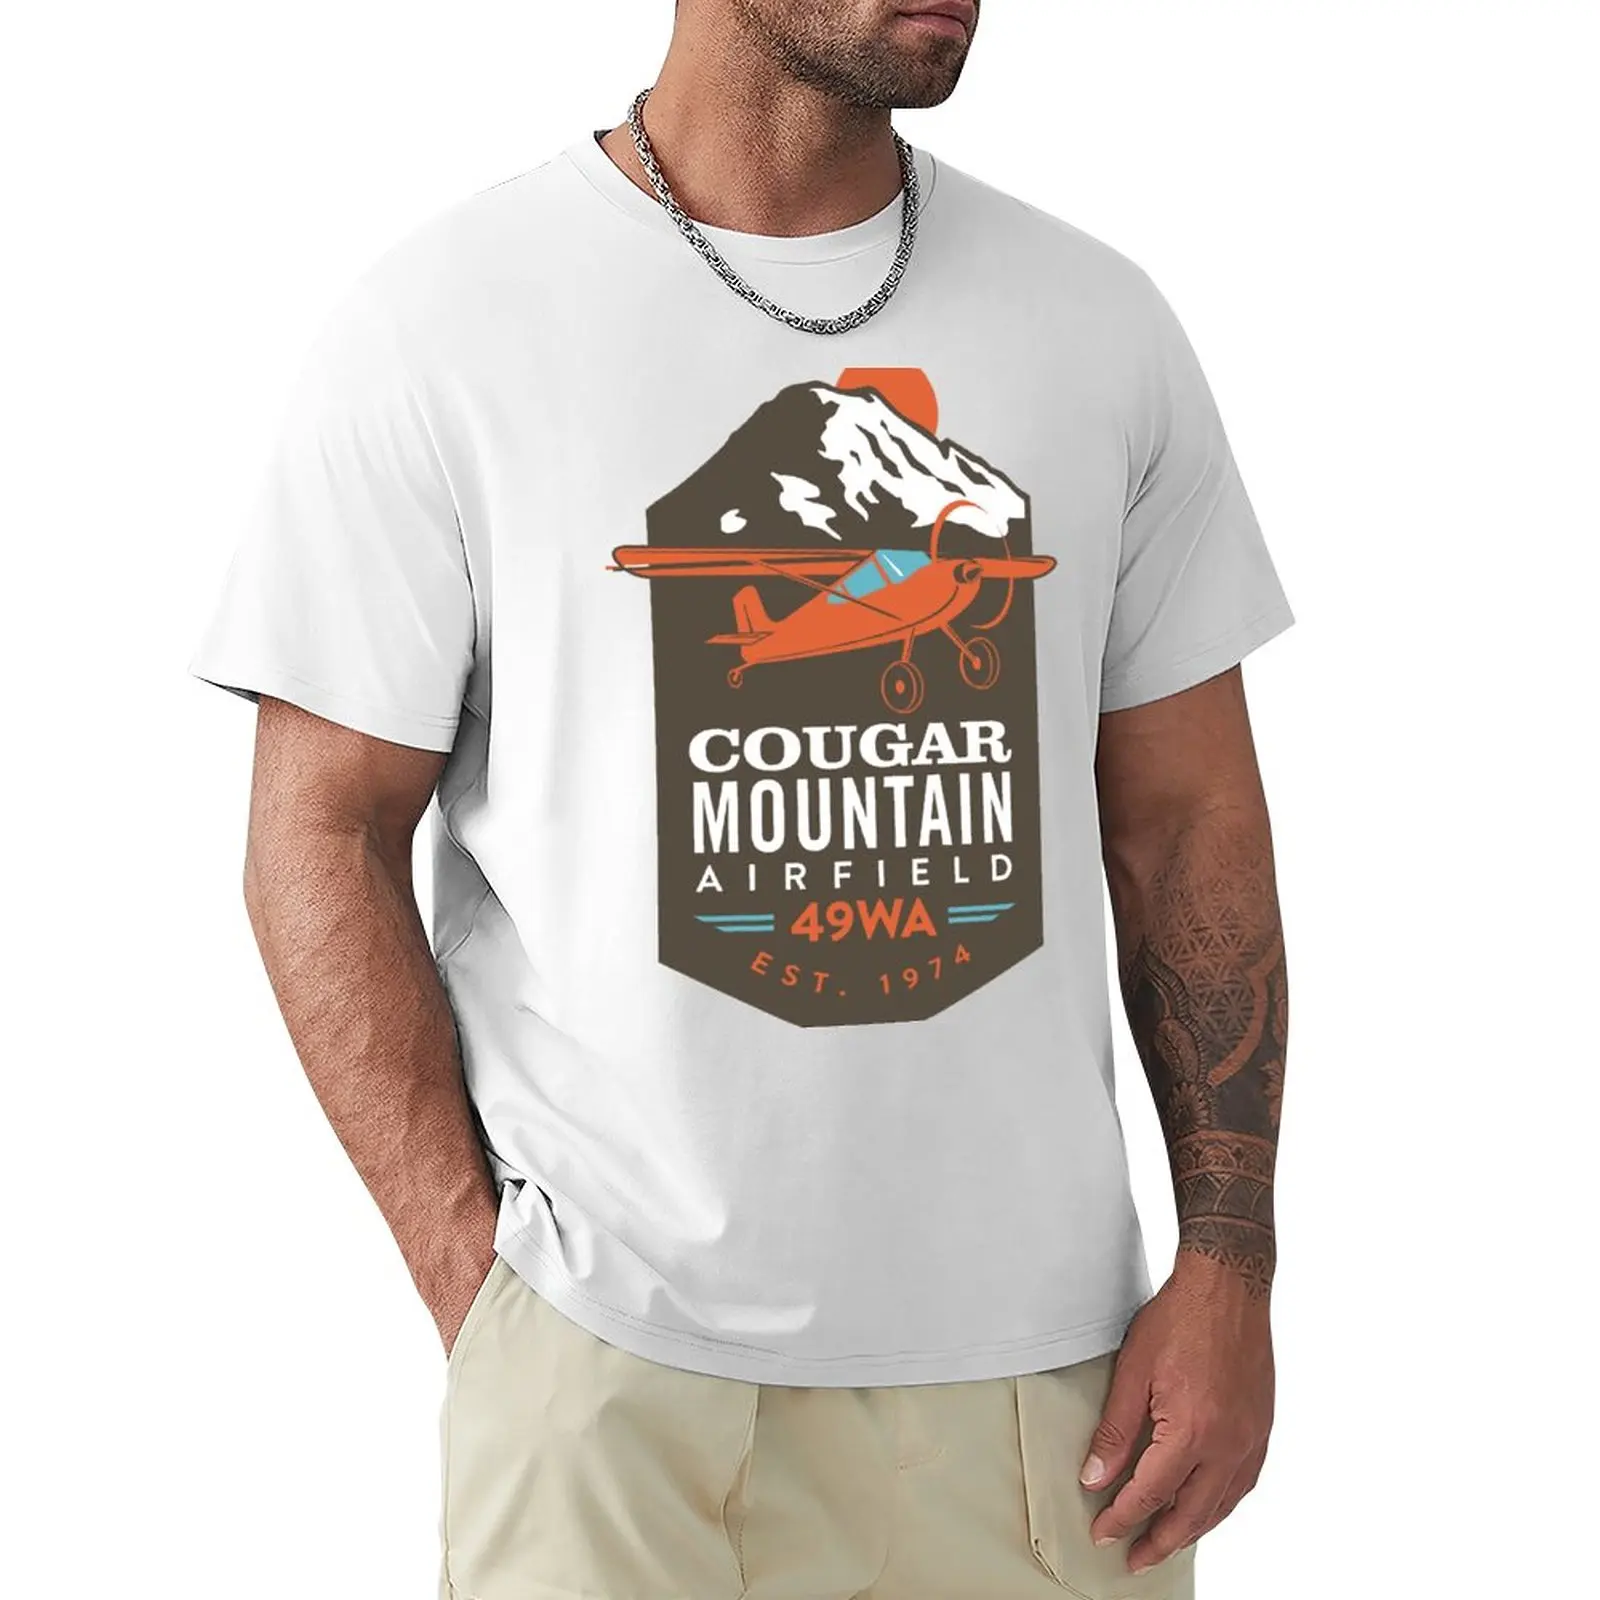 

CougarMountainAirfield_2020_1 T-Shirt aesthetic clothes blondie t shirt quick drying t-shirt plain white t shirts men